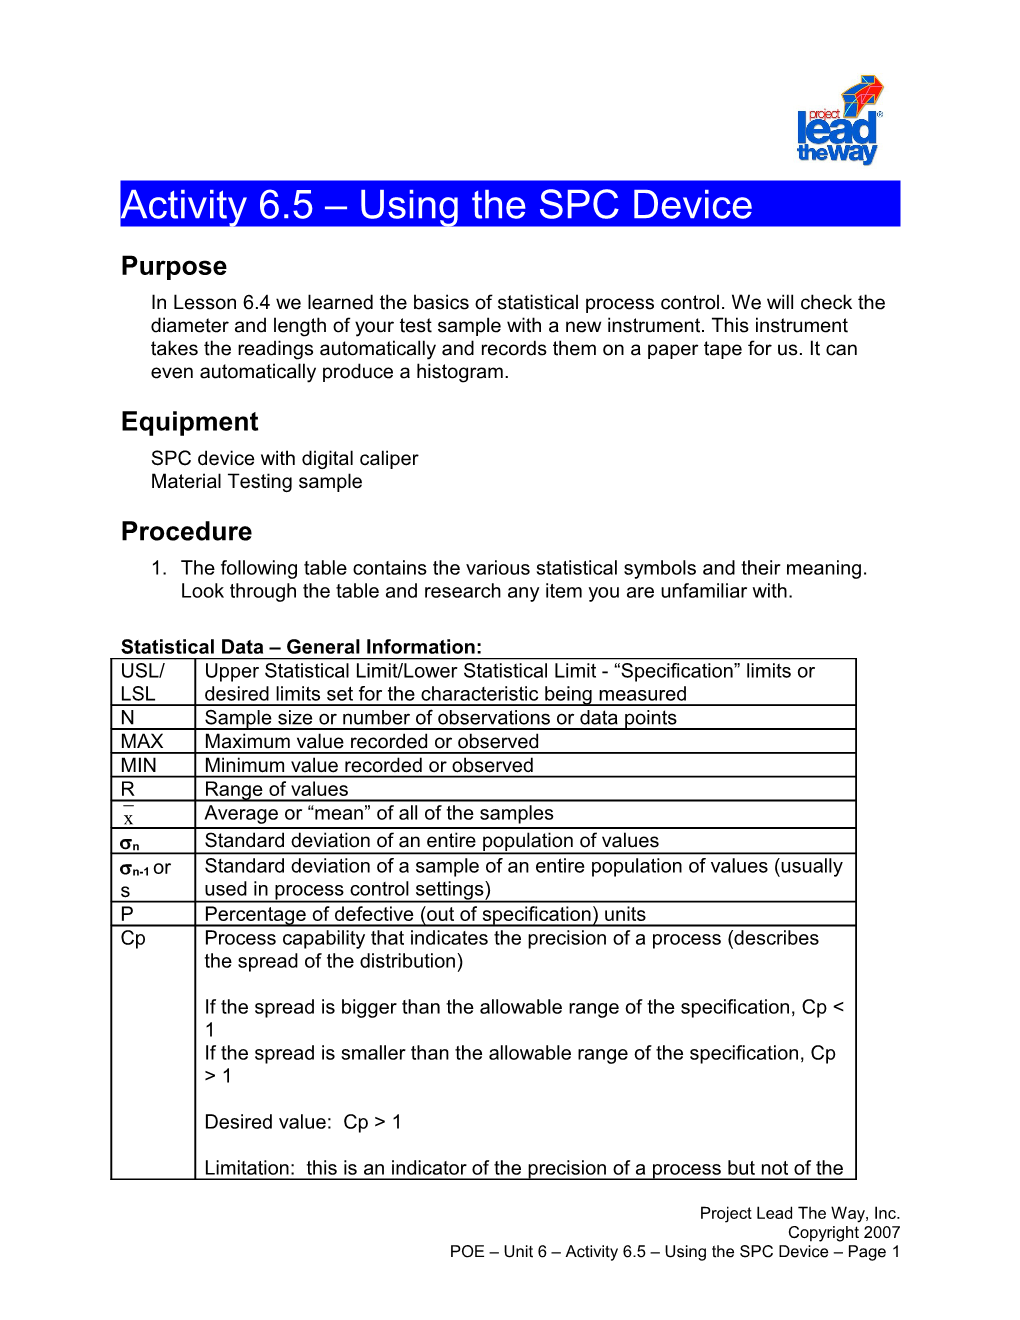 Activity 6.5 - Using the SPC Device